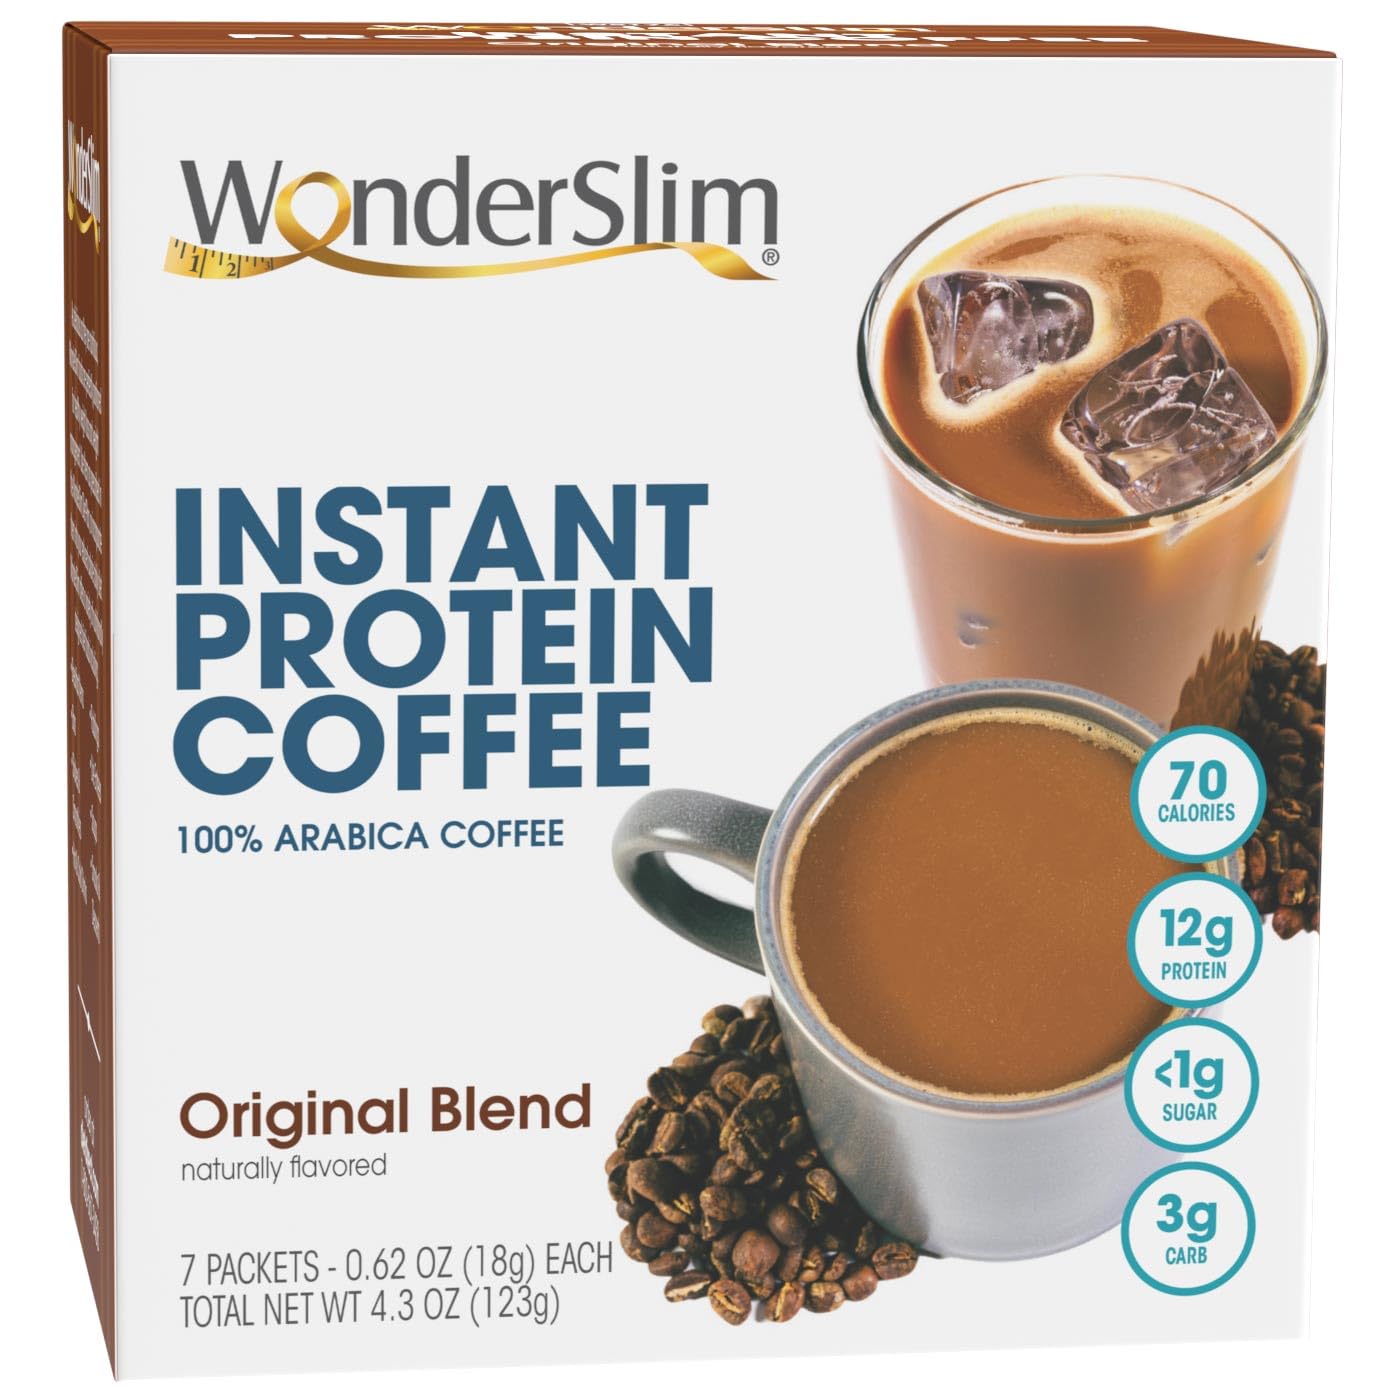 WonderSlim Protein Instant Coffee, 12g Protein, 70 calories, 3g Carbs, Gluten Free & Keto Friendly (7ct)